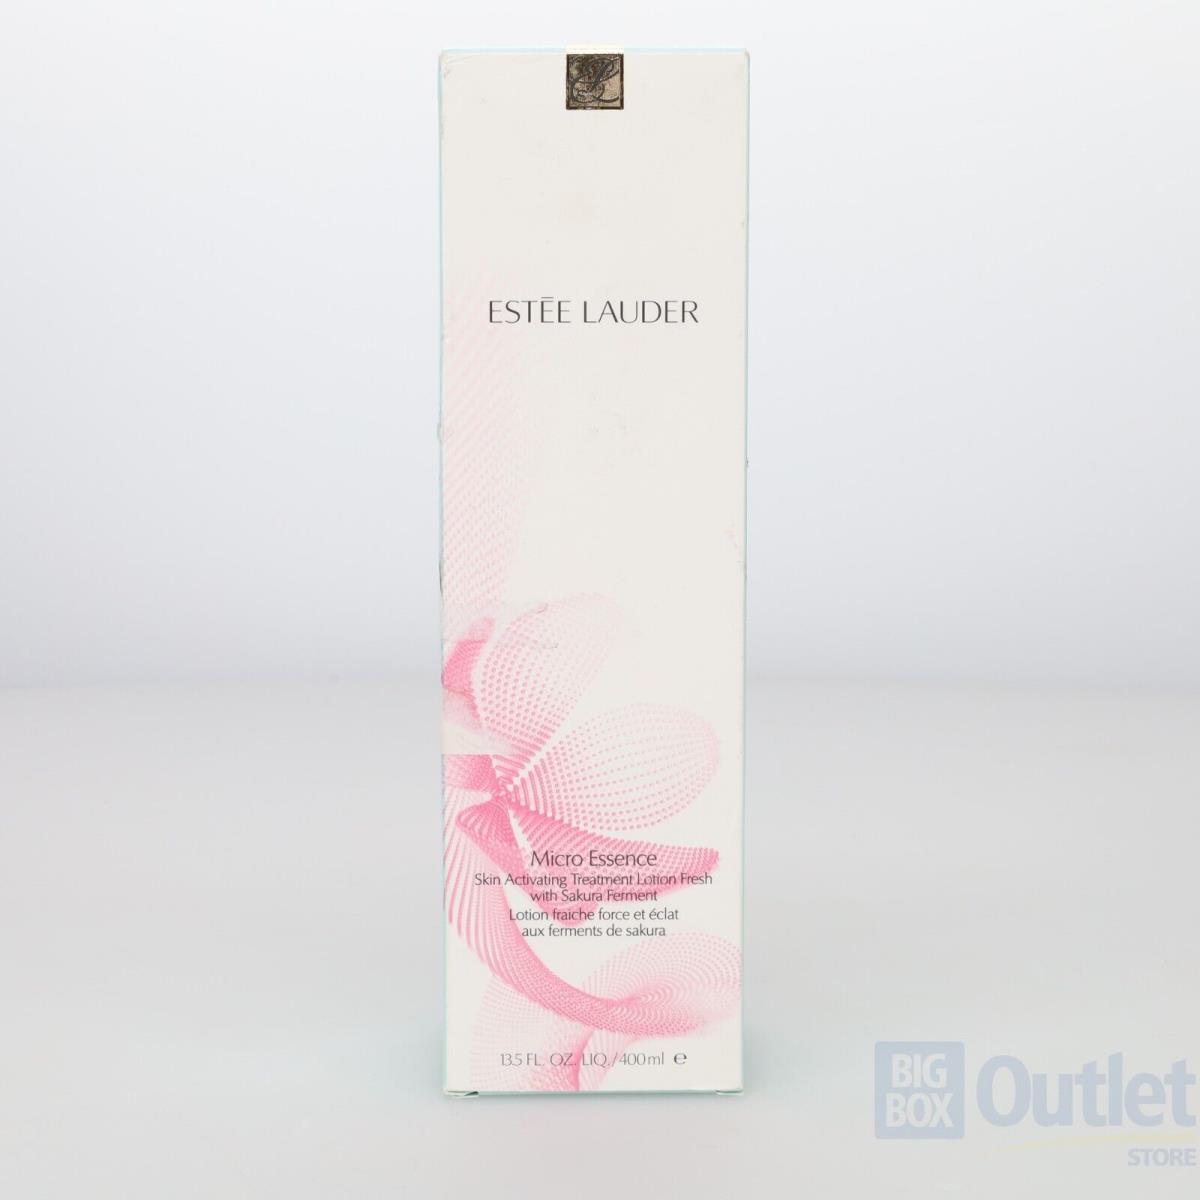 Estee Lauder - Micro Essence Treatment Lotion Fresh with Sakura Ferment - 13.5oz